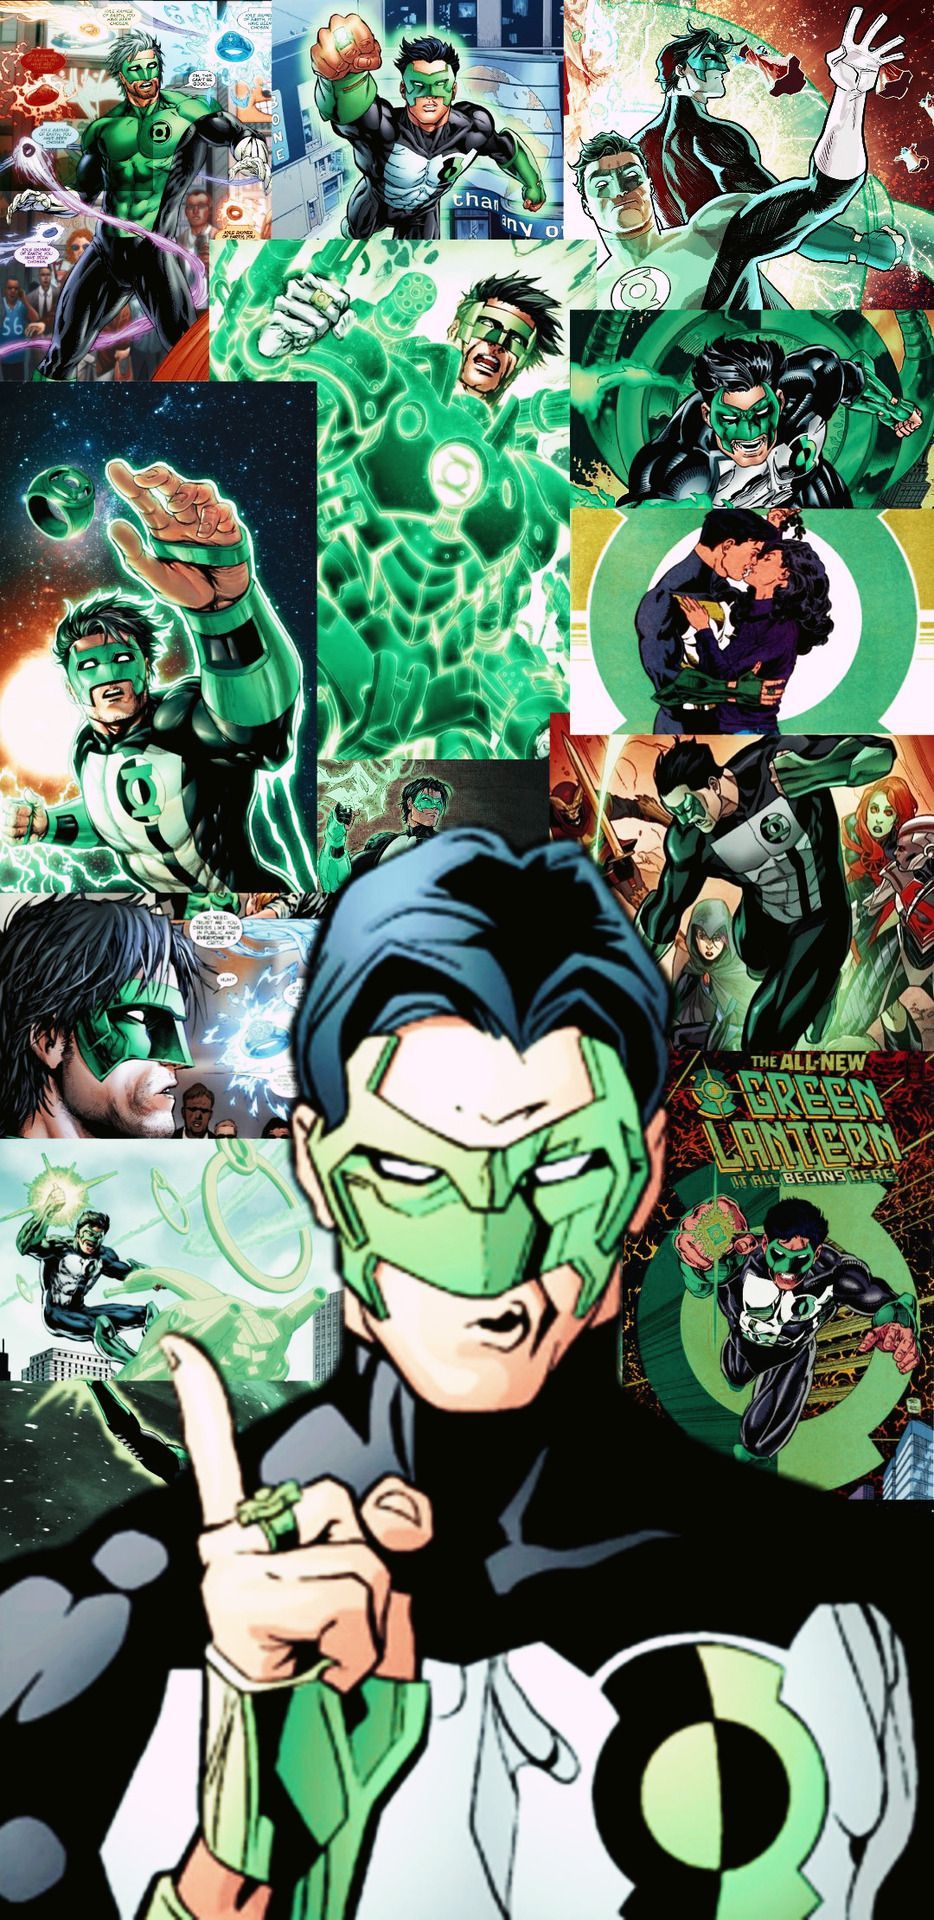 Green Lantern Corps Phone Wallpaper: Kyle Rayner. Green lantern wallpaper, Green lantern kyle rayner, Green lantern corps